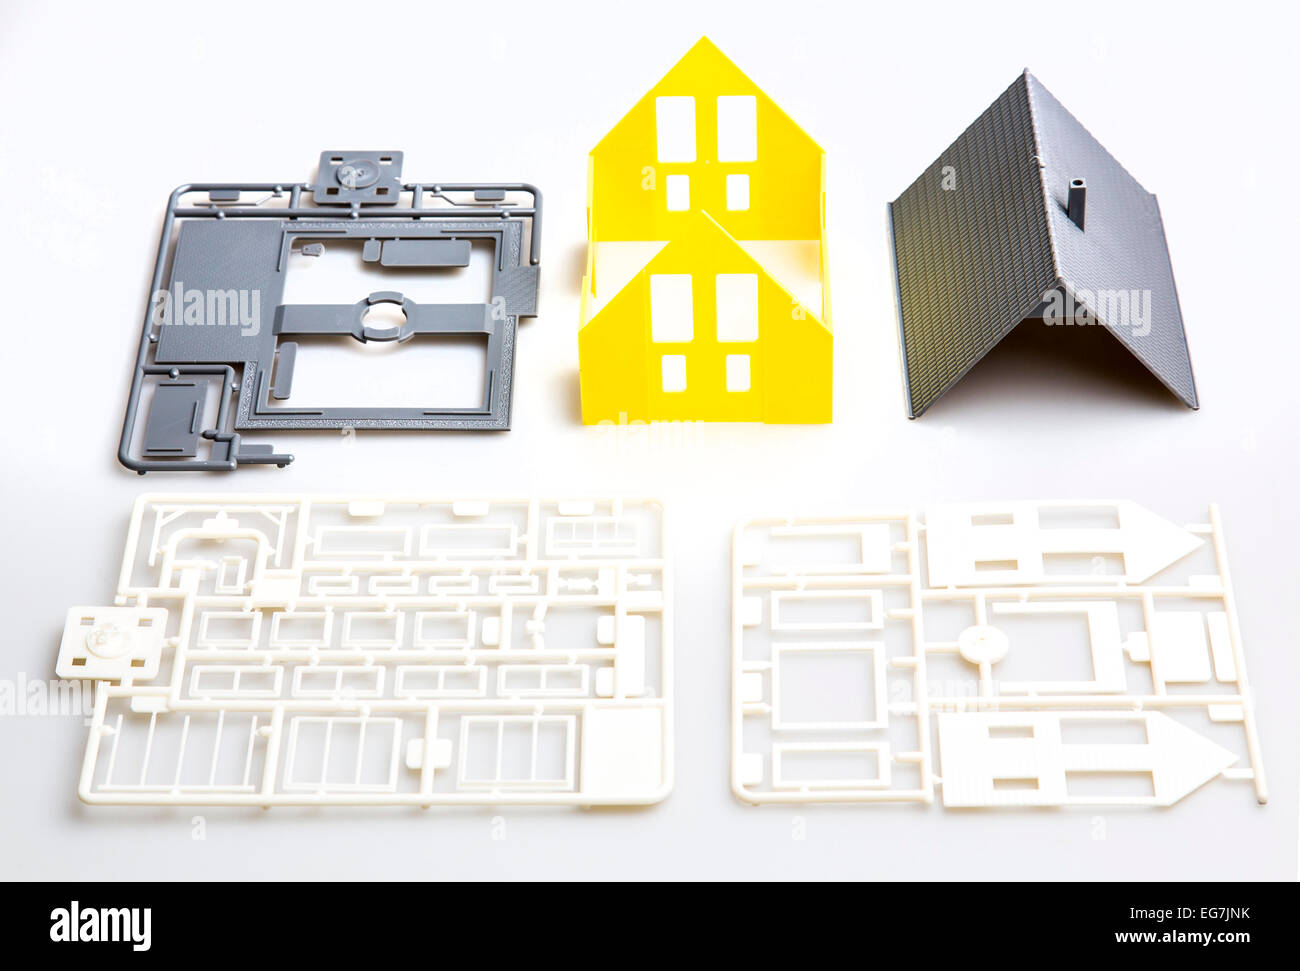 Symbolic image, house, home, construction, model house assembly kit, Stock Photo